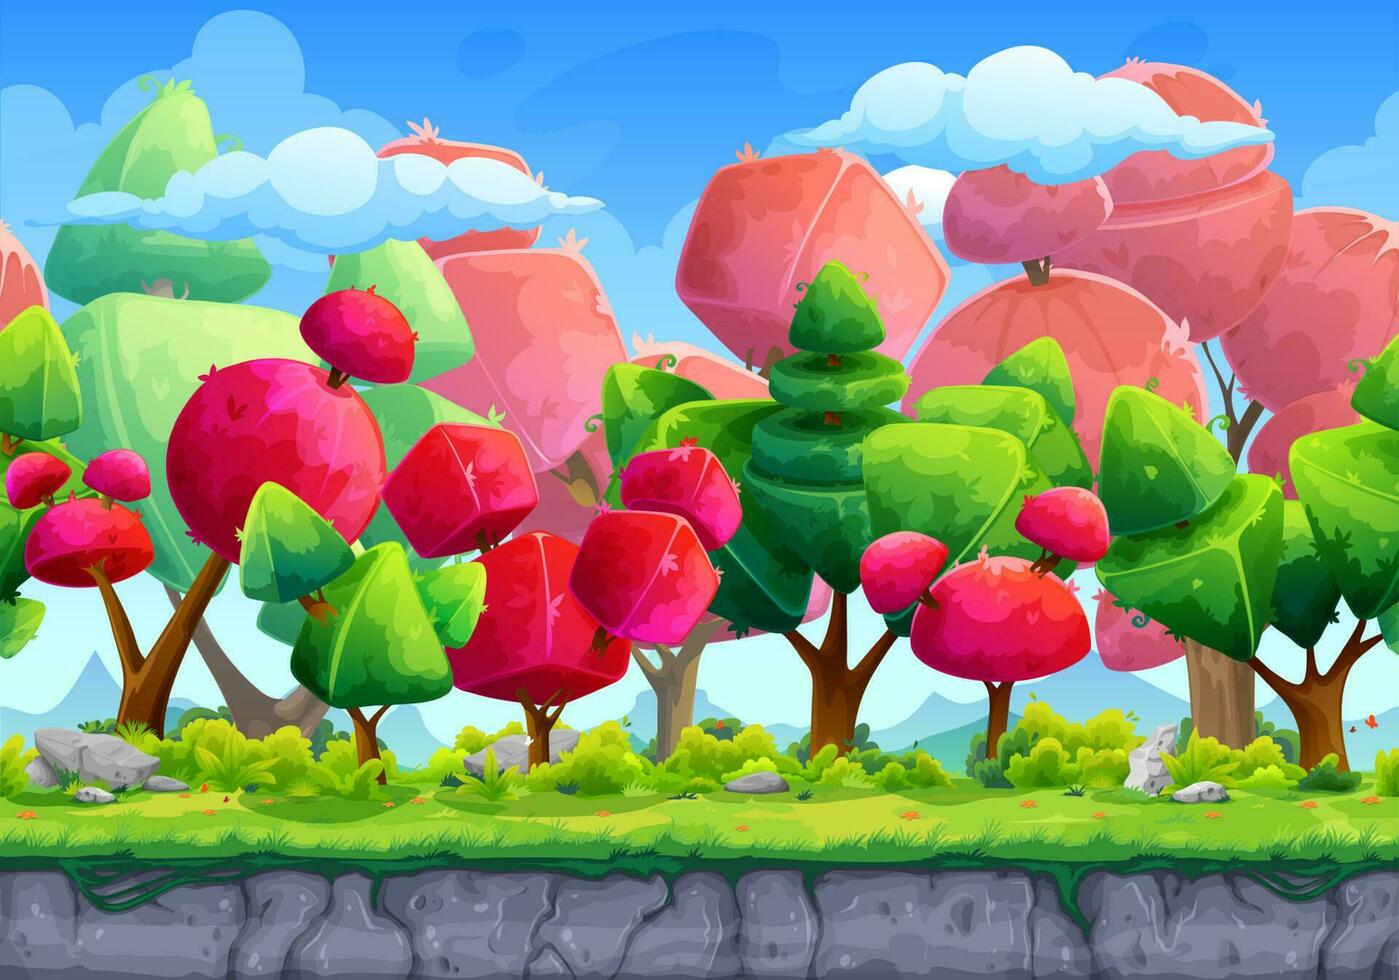 Cartoon fantasy game forest landscape scene vector